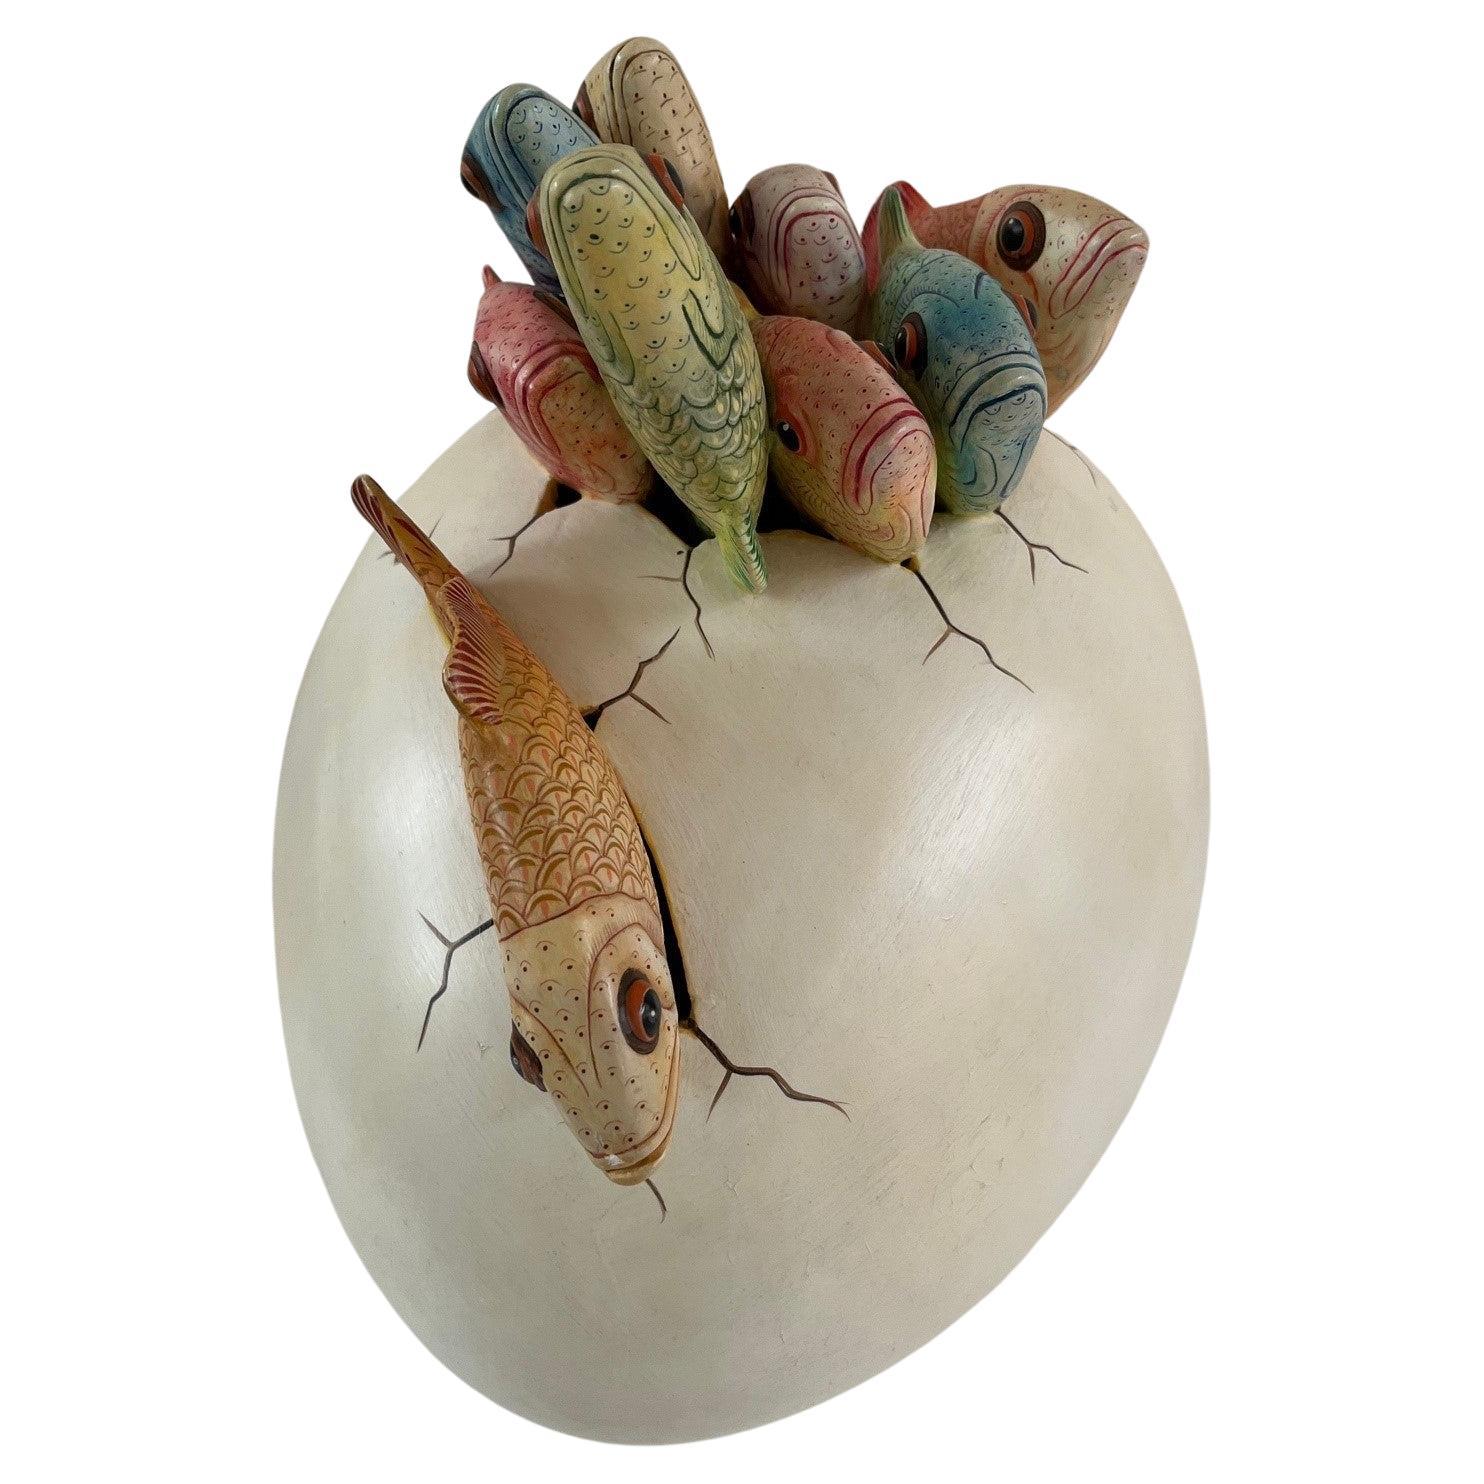 Grande sculpture en céramique représentant un œuf de poisson attachant, de Sergio Bustamente. en vente